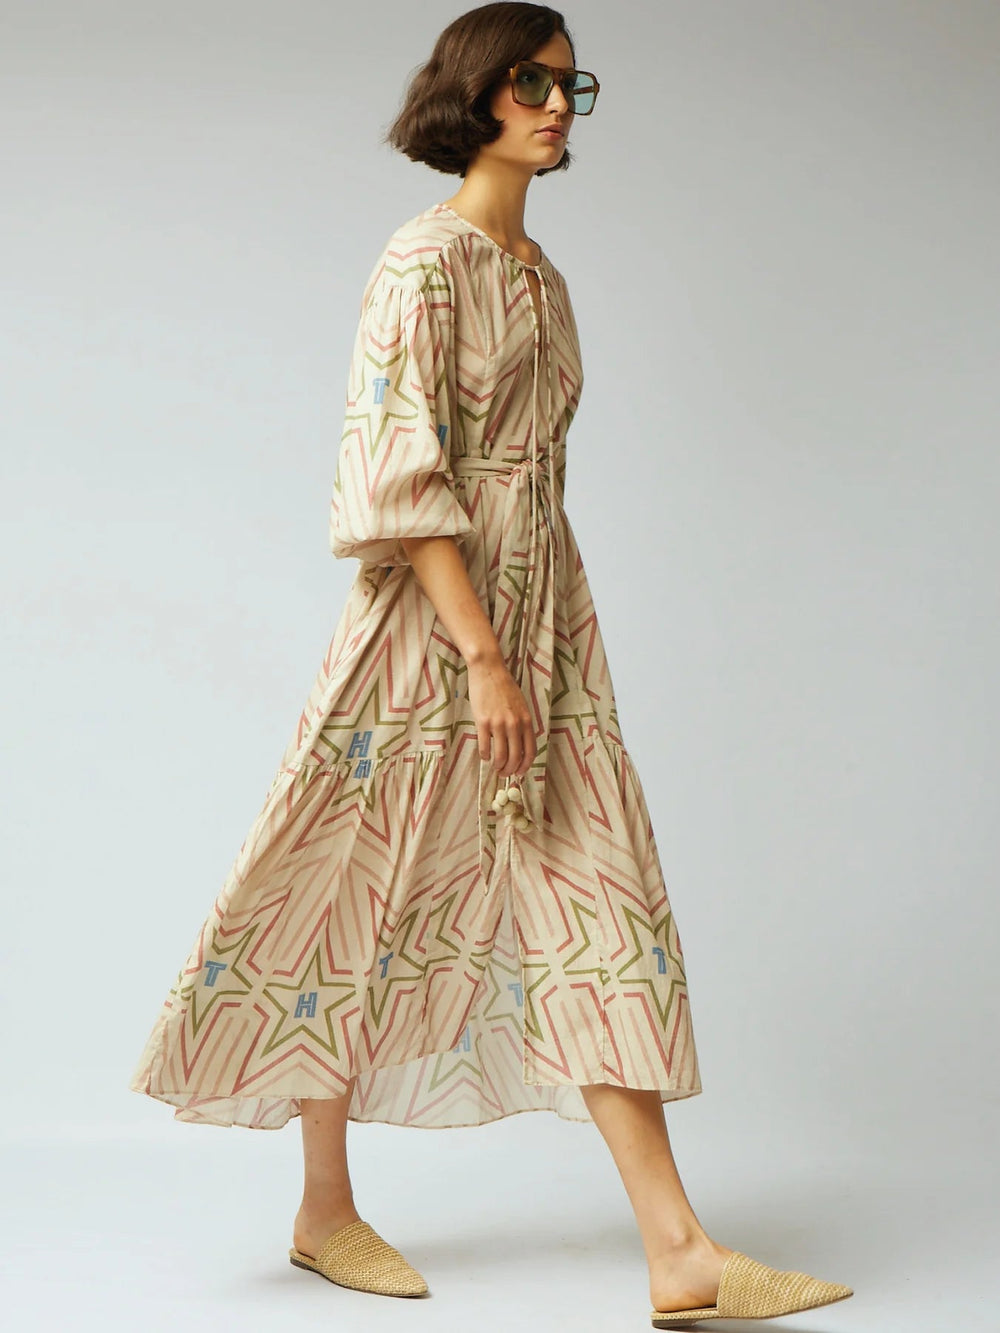 Tallulah & Hope Dress Tallulah & Hope | Moroccan Dress in Starrow